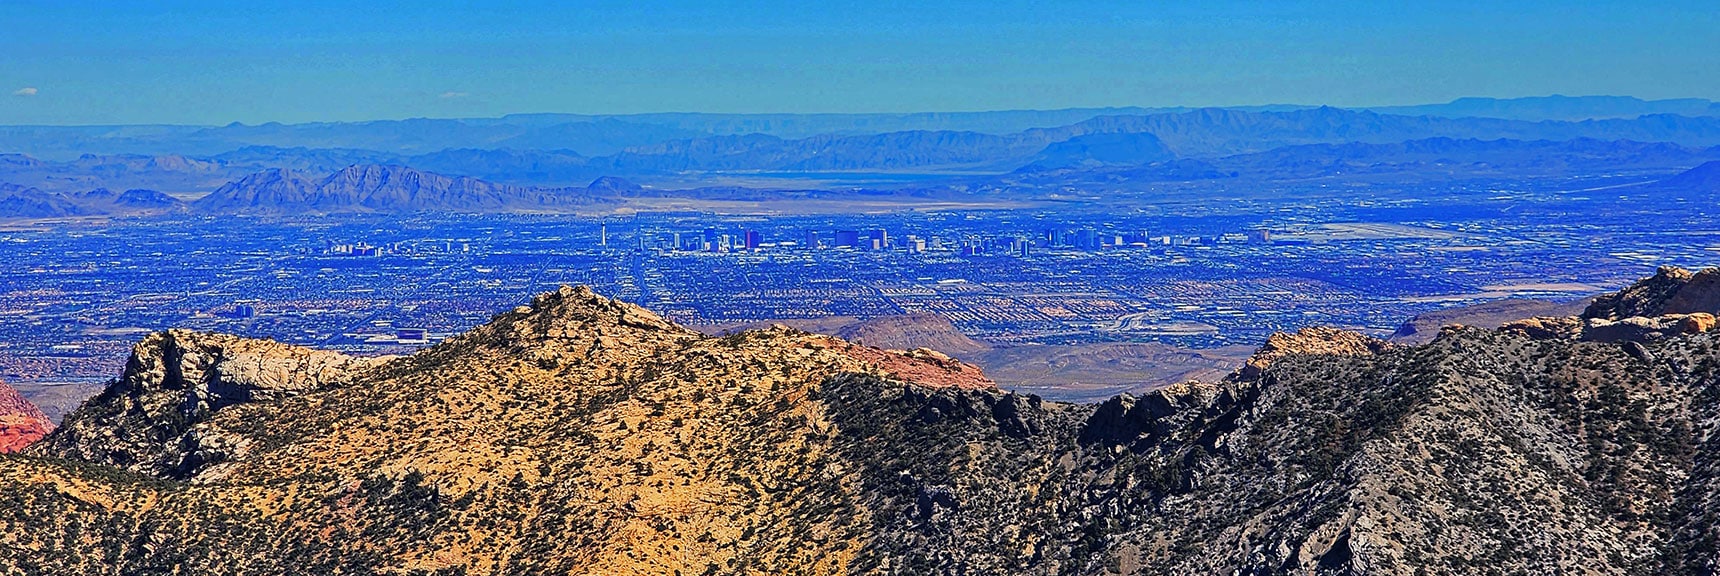 Las Vegas Strip Beyond Rainbow Mts. North Ridgeline (foreground) | Mini Matterhorn Pinnacle | Wilson Ridge | Lovell Canyon, Nevada